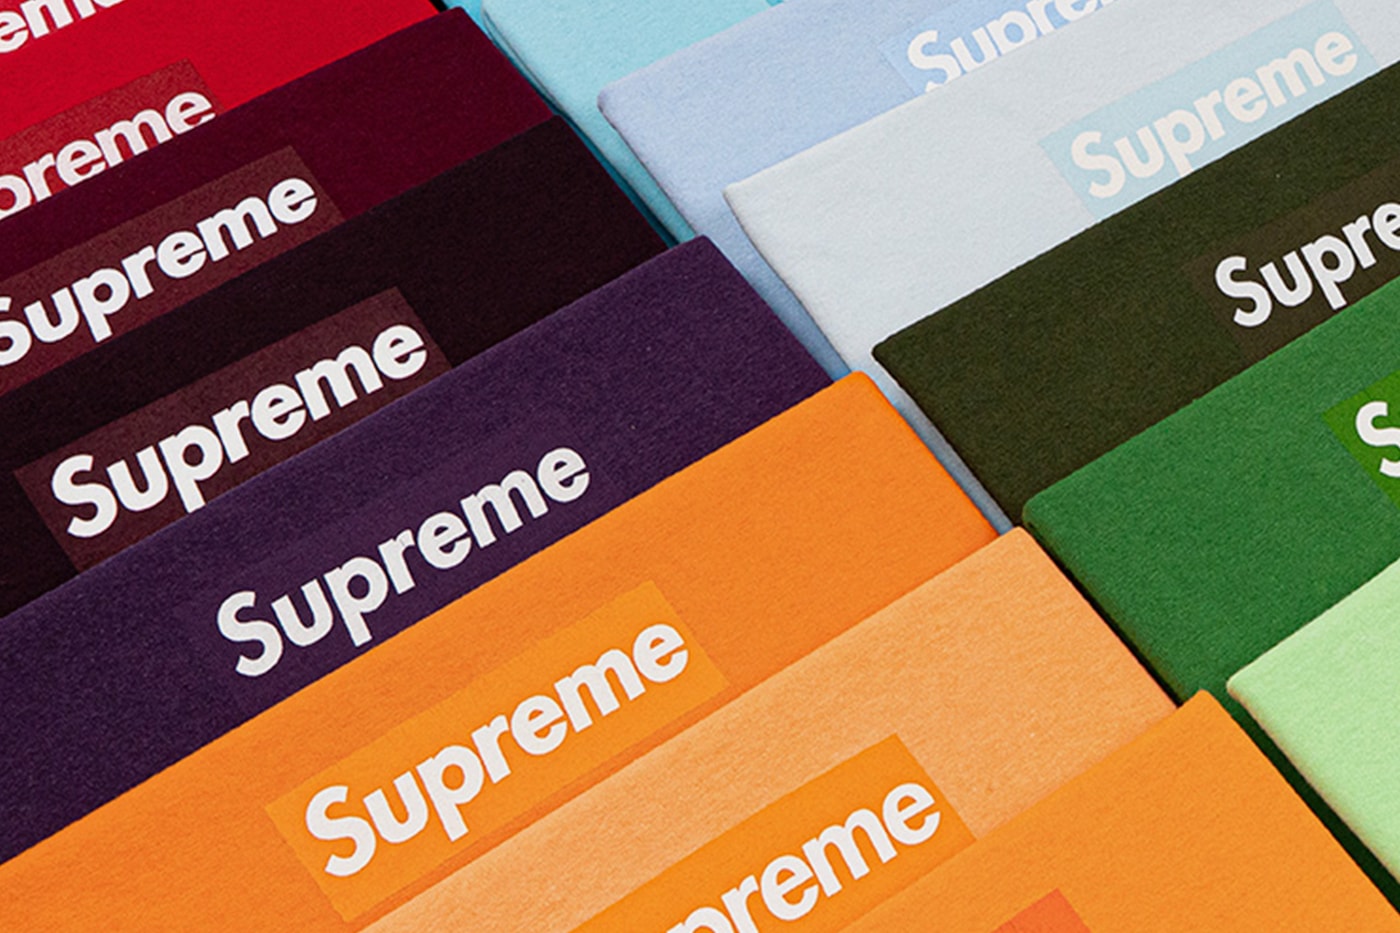 Supreme 全系列 Box Logo T-Shirt 預估拍售價格高達 $200 萬美元